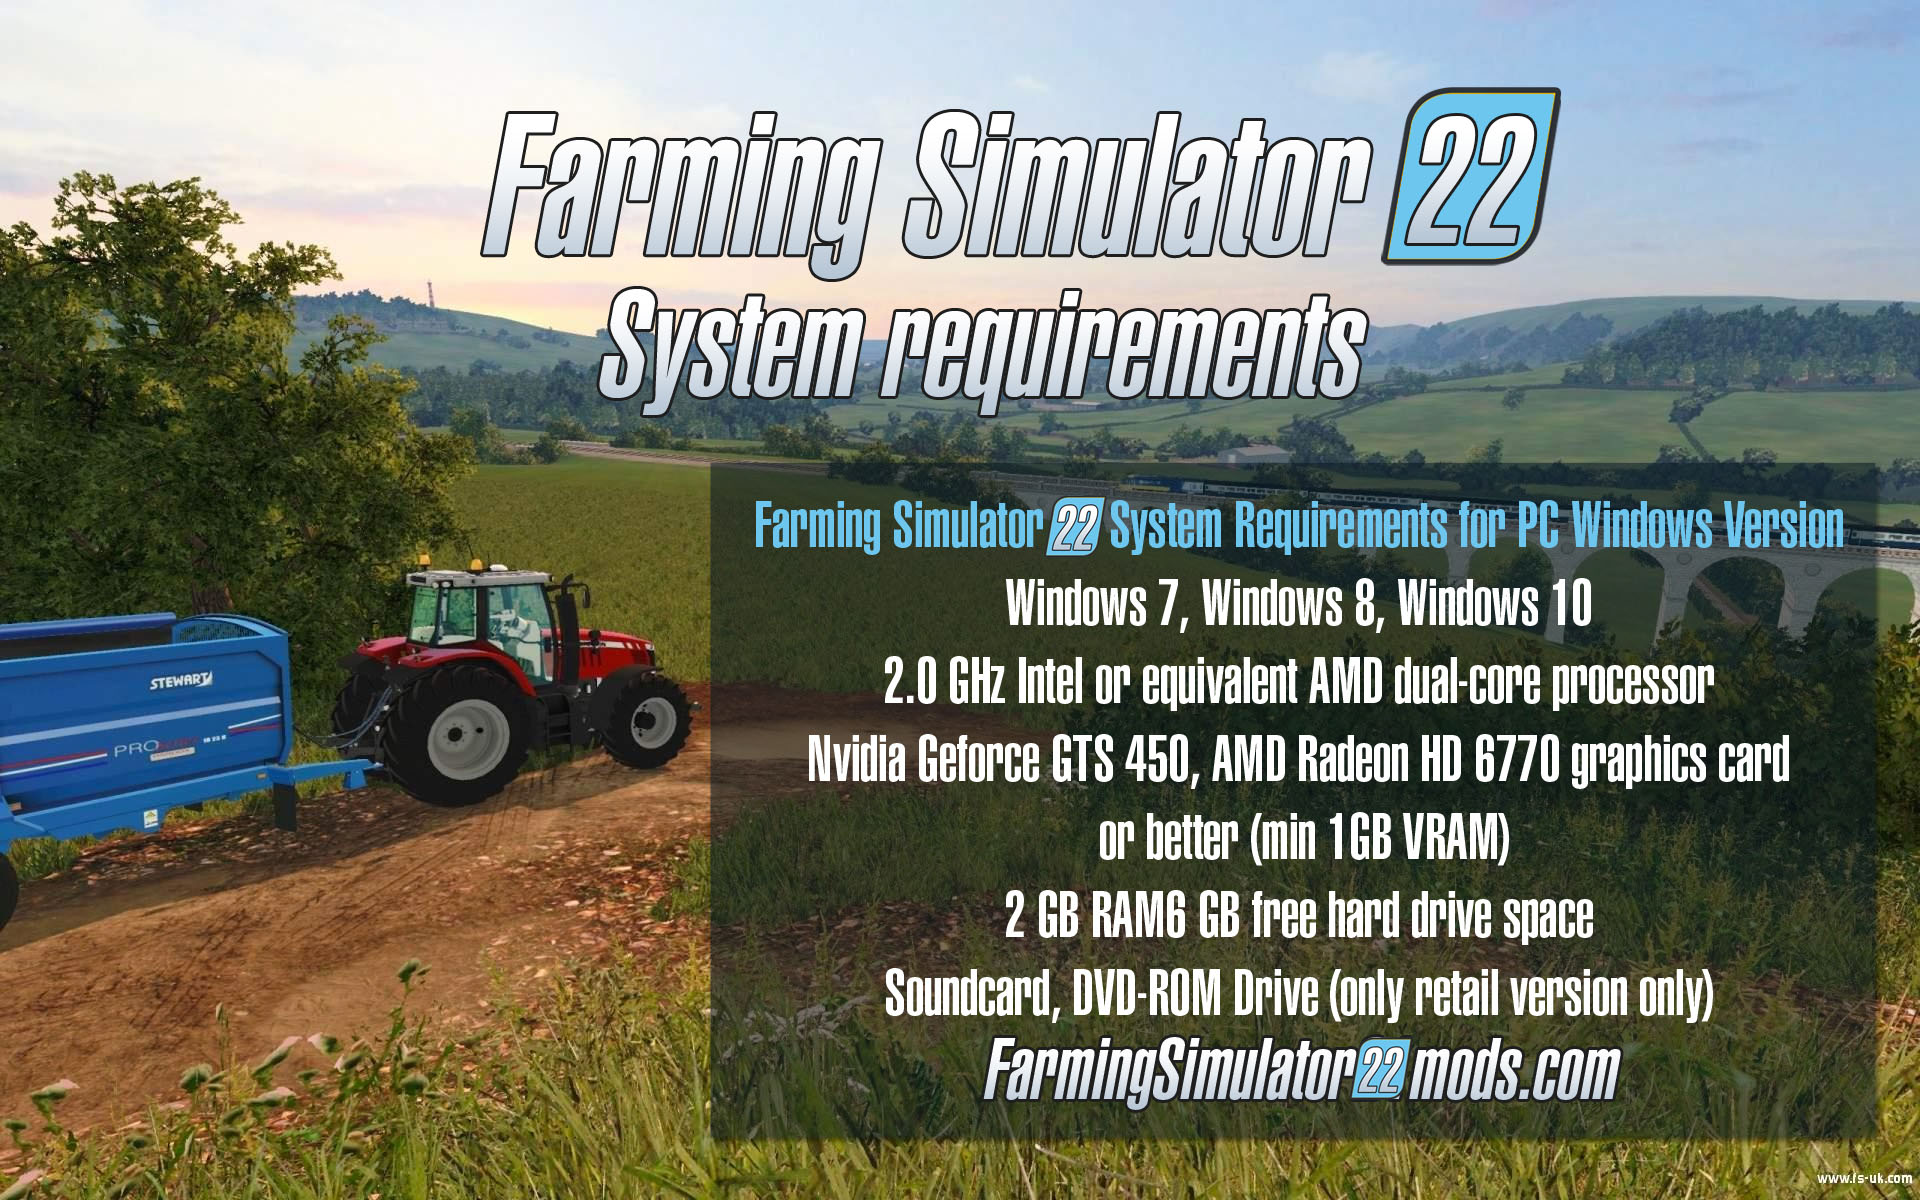 farming simulator 14 money cheat pc